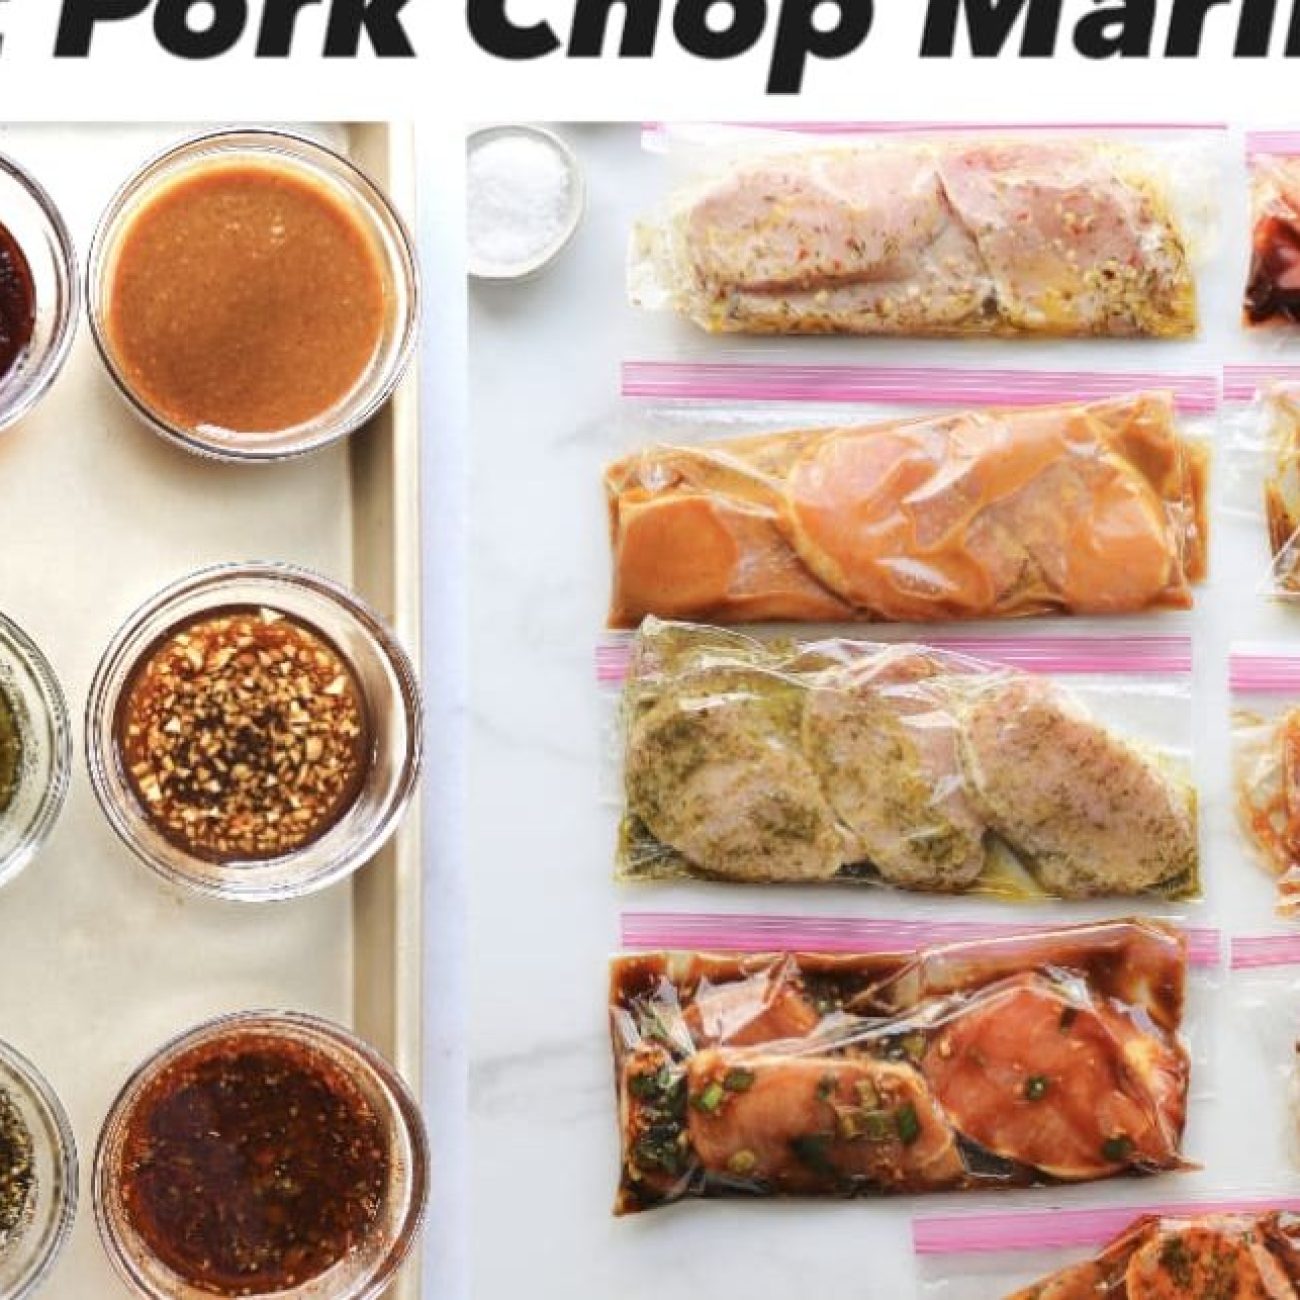 Grilled Pork Chops Marinade